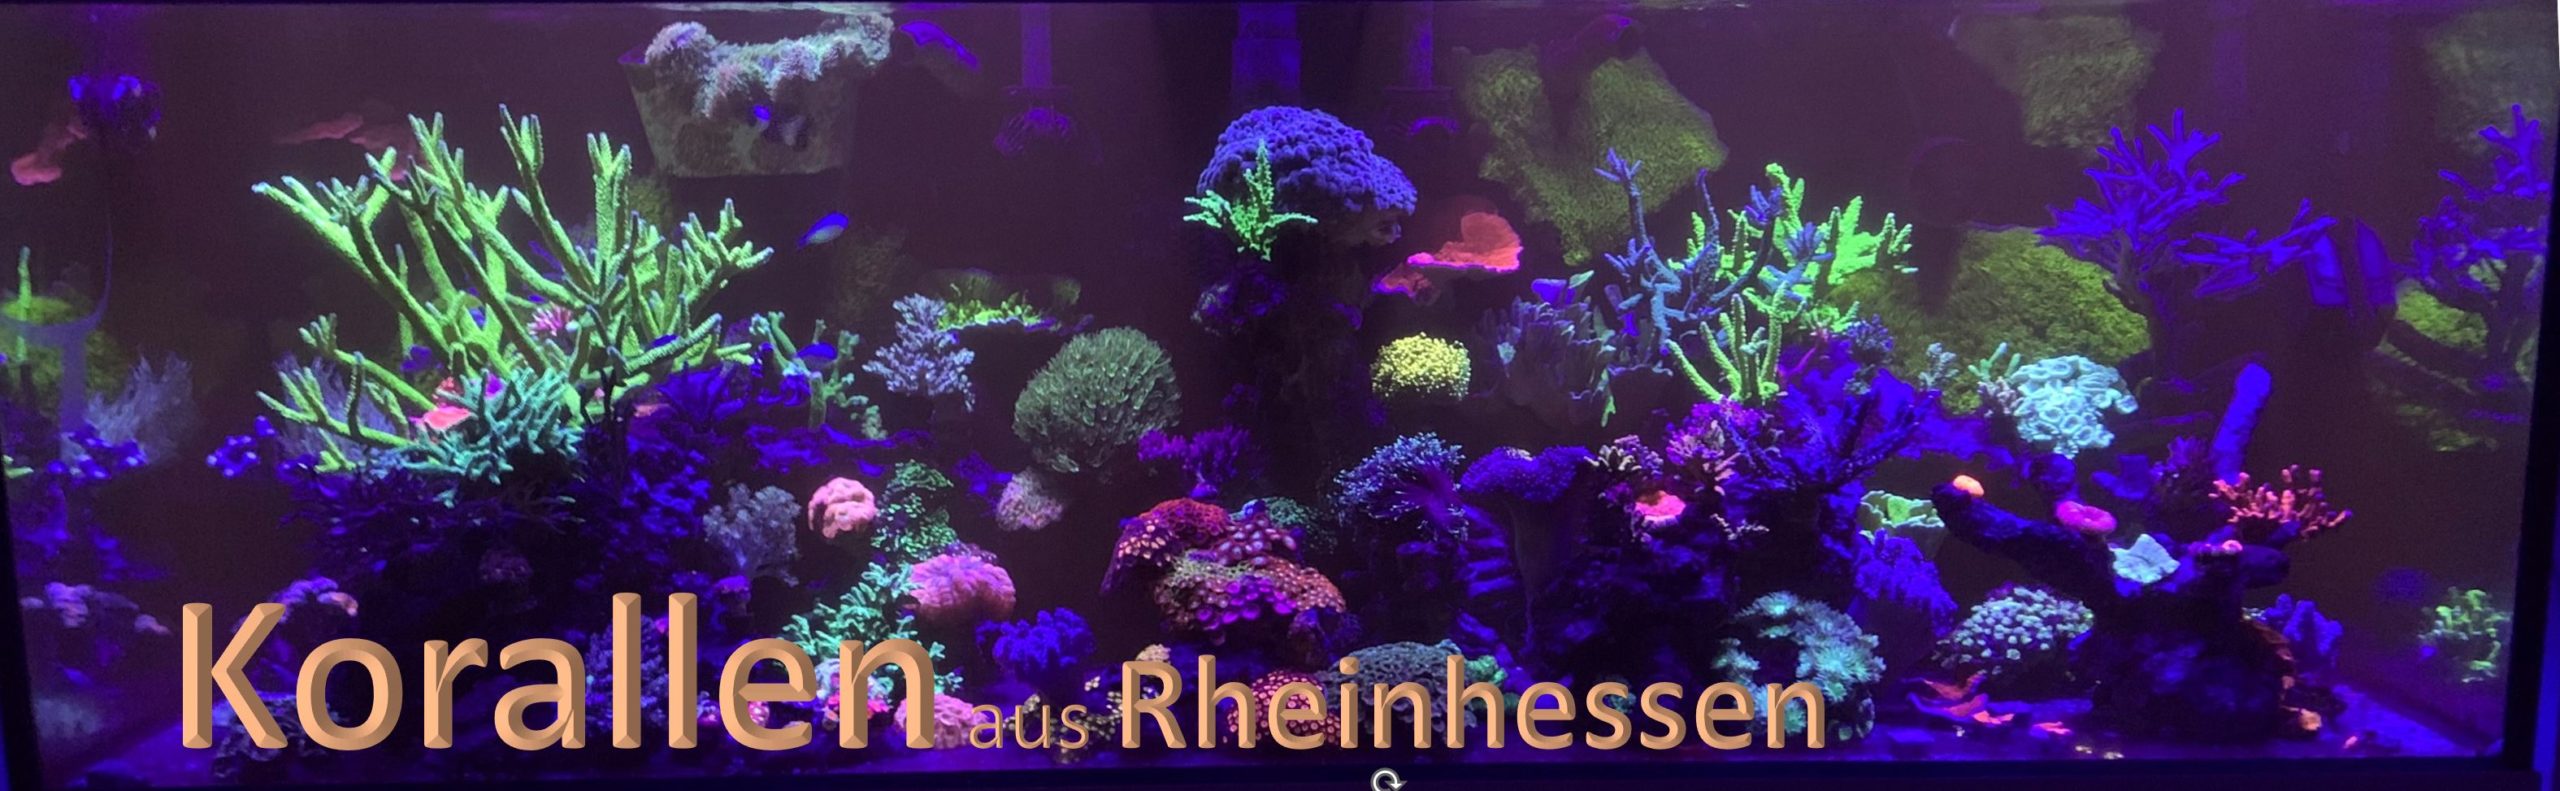 Korály Rhoihesse Reef